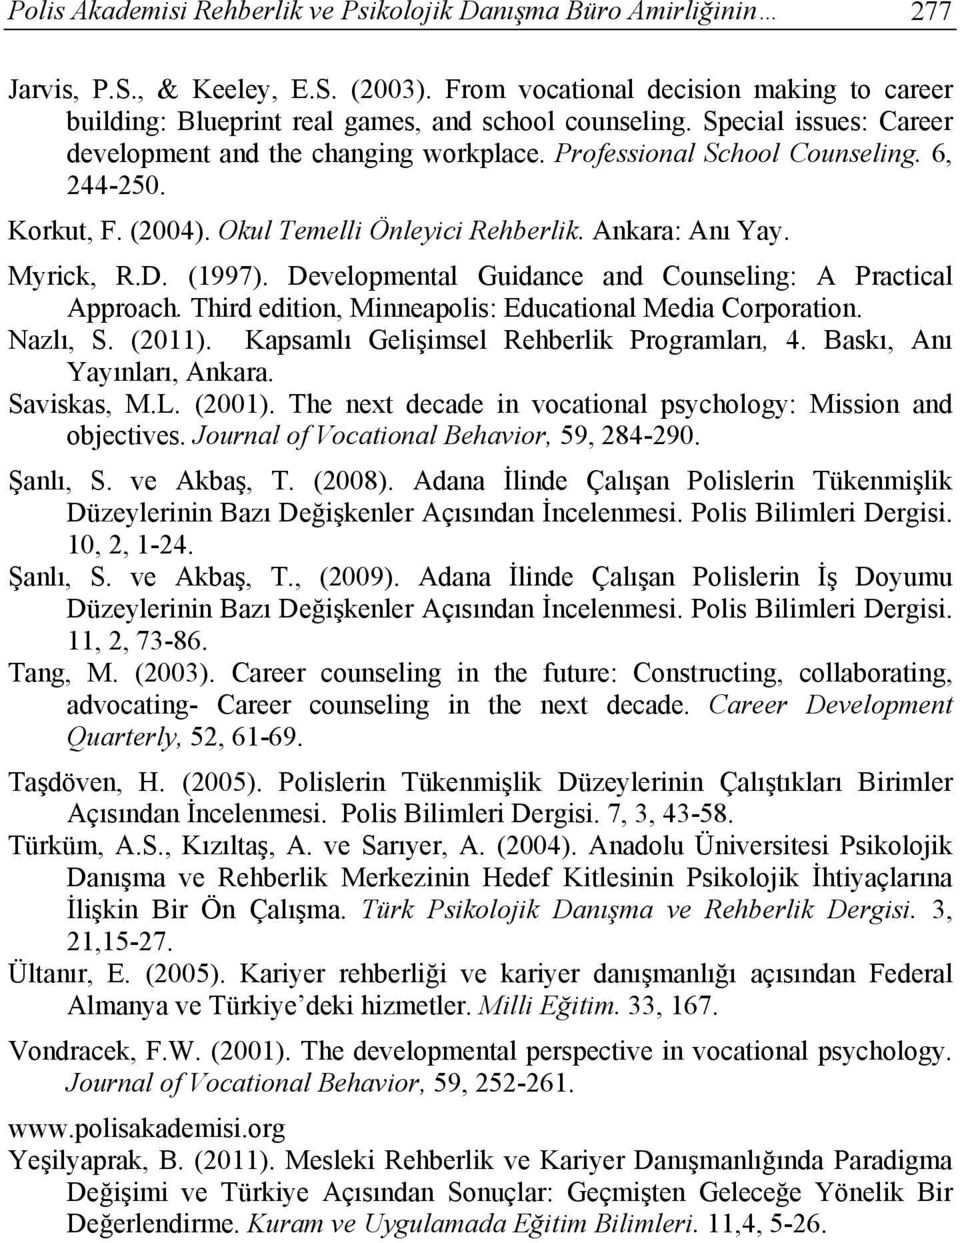 6, 244-250. Korkut, F. (2004). Okul Temelli Önleyici Rehberlik. Ankara: Anı Yay. Myrick, R.D. (1997). Developmental Guidance and Counseling: A Practical Approach.